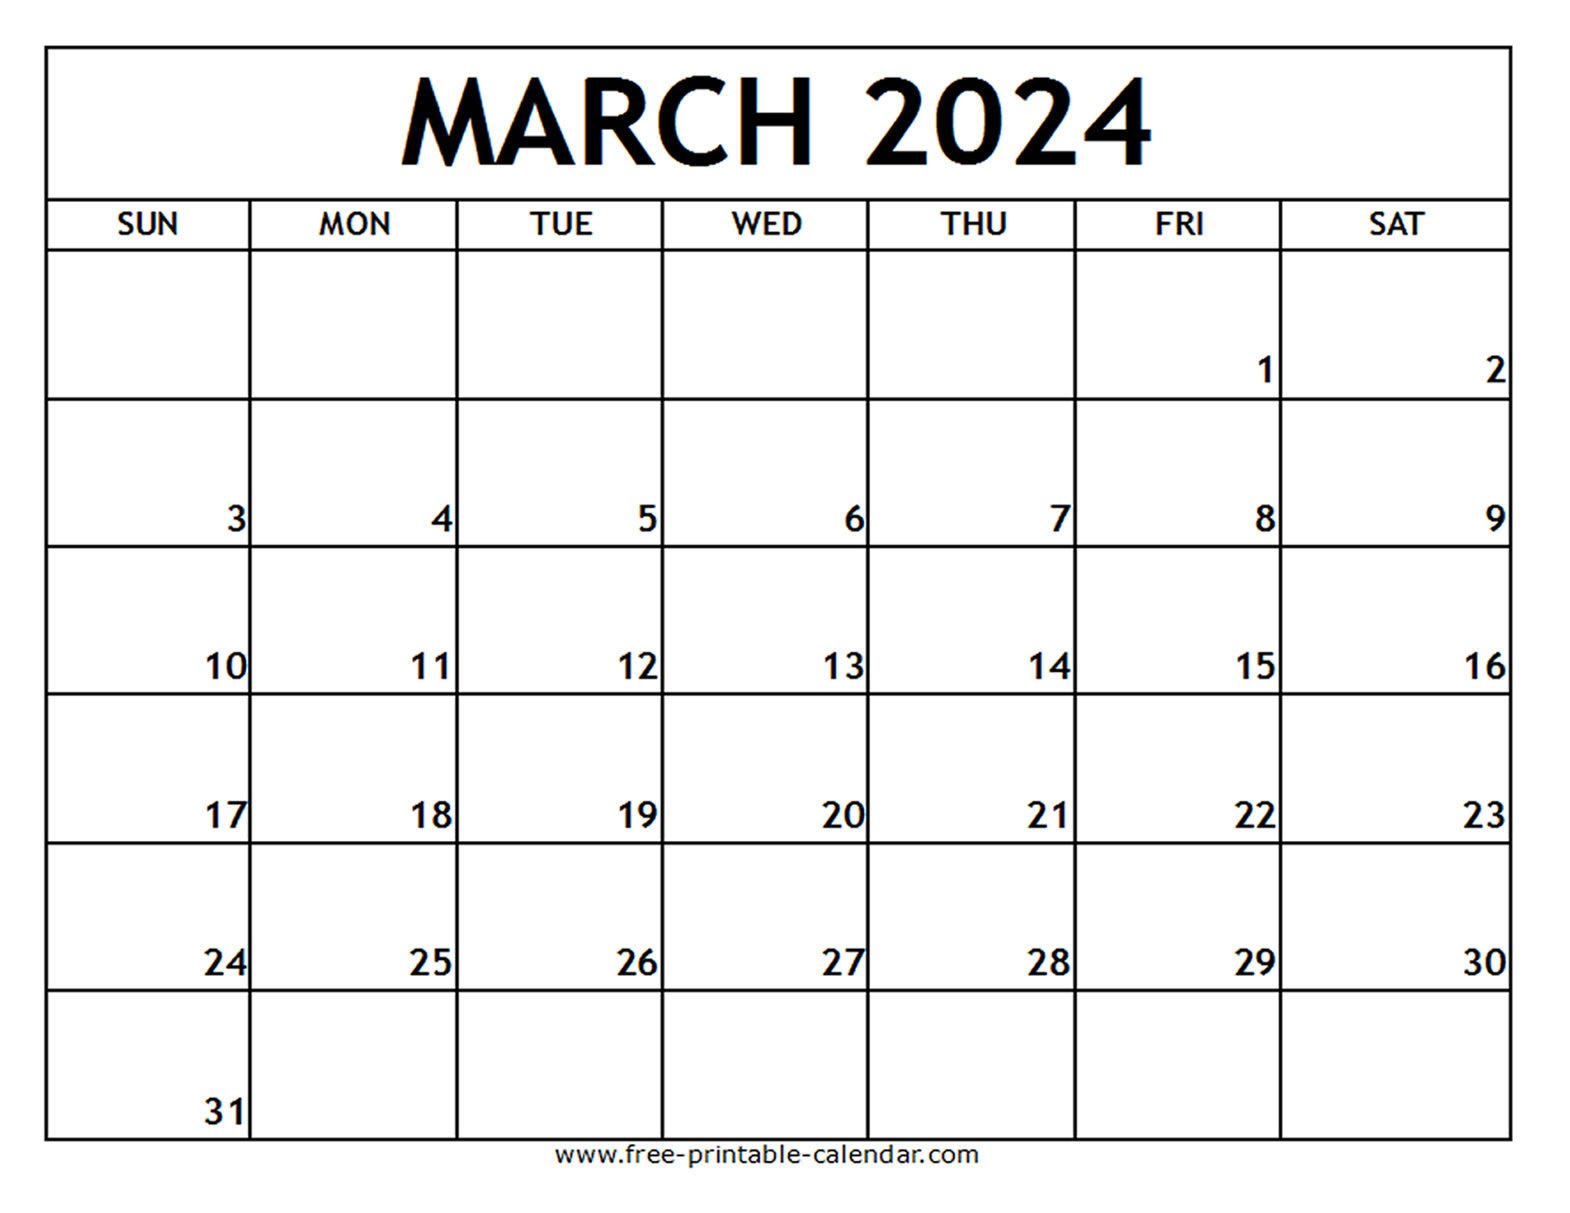 March 2024 Printable Calendar - Free-Printable-Calendar | March 2024 Calendar Printable